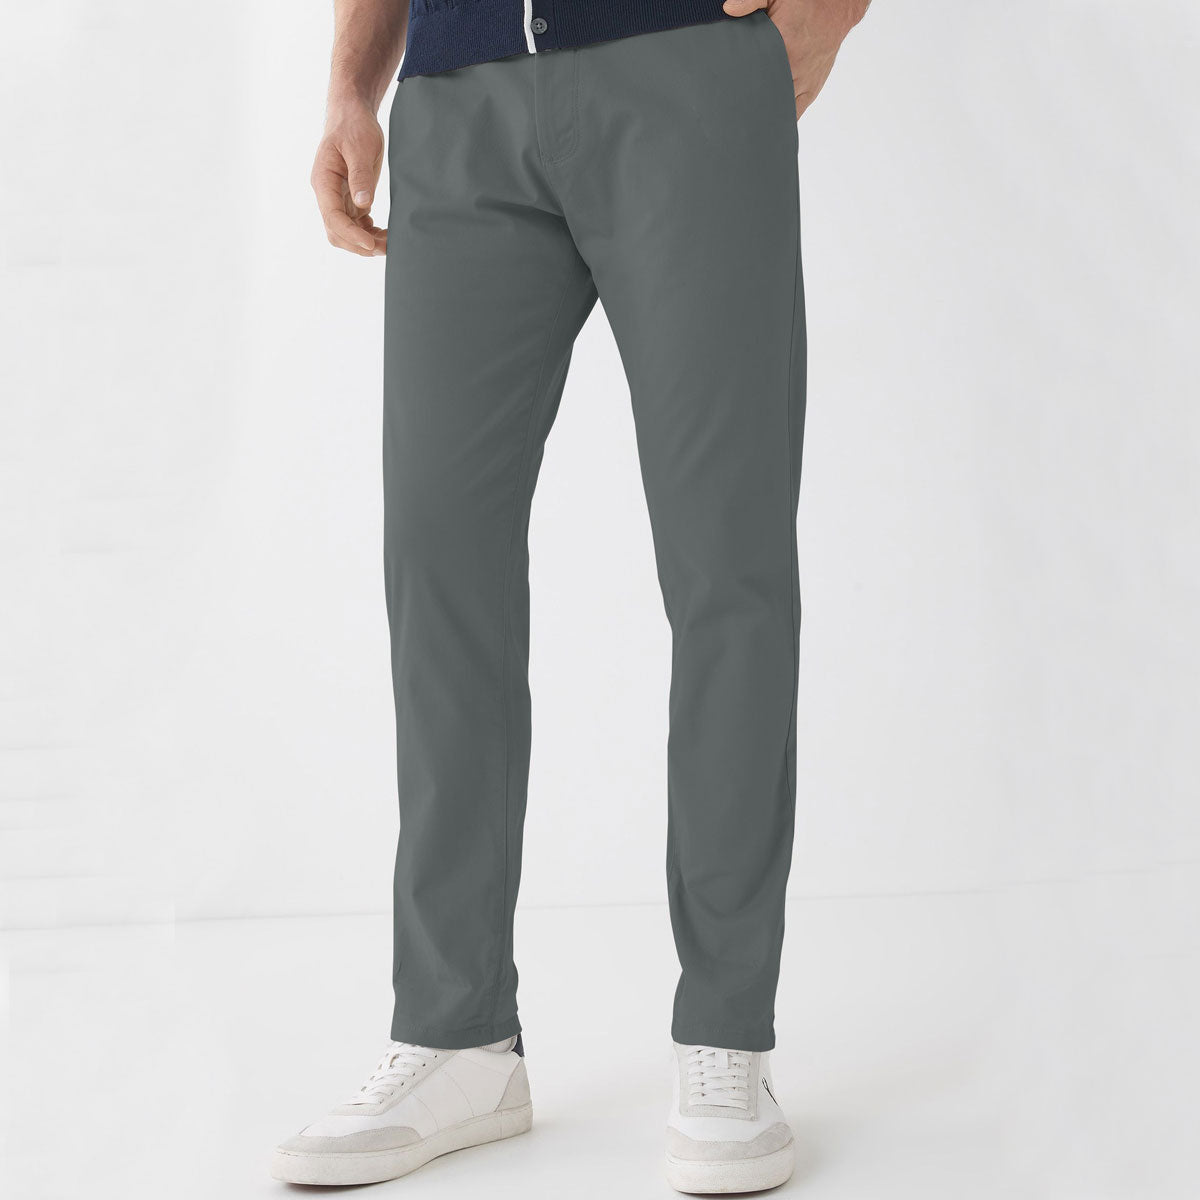 Black Slim Fit Cotton Groom Pants for Men | GentWith